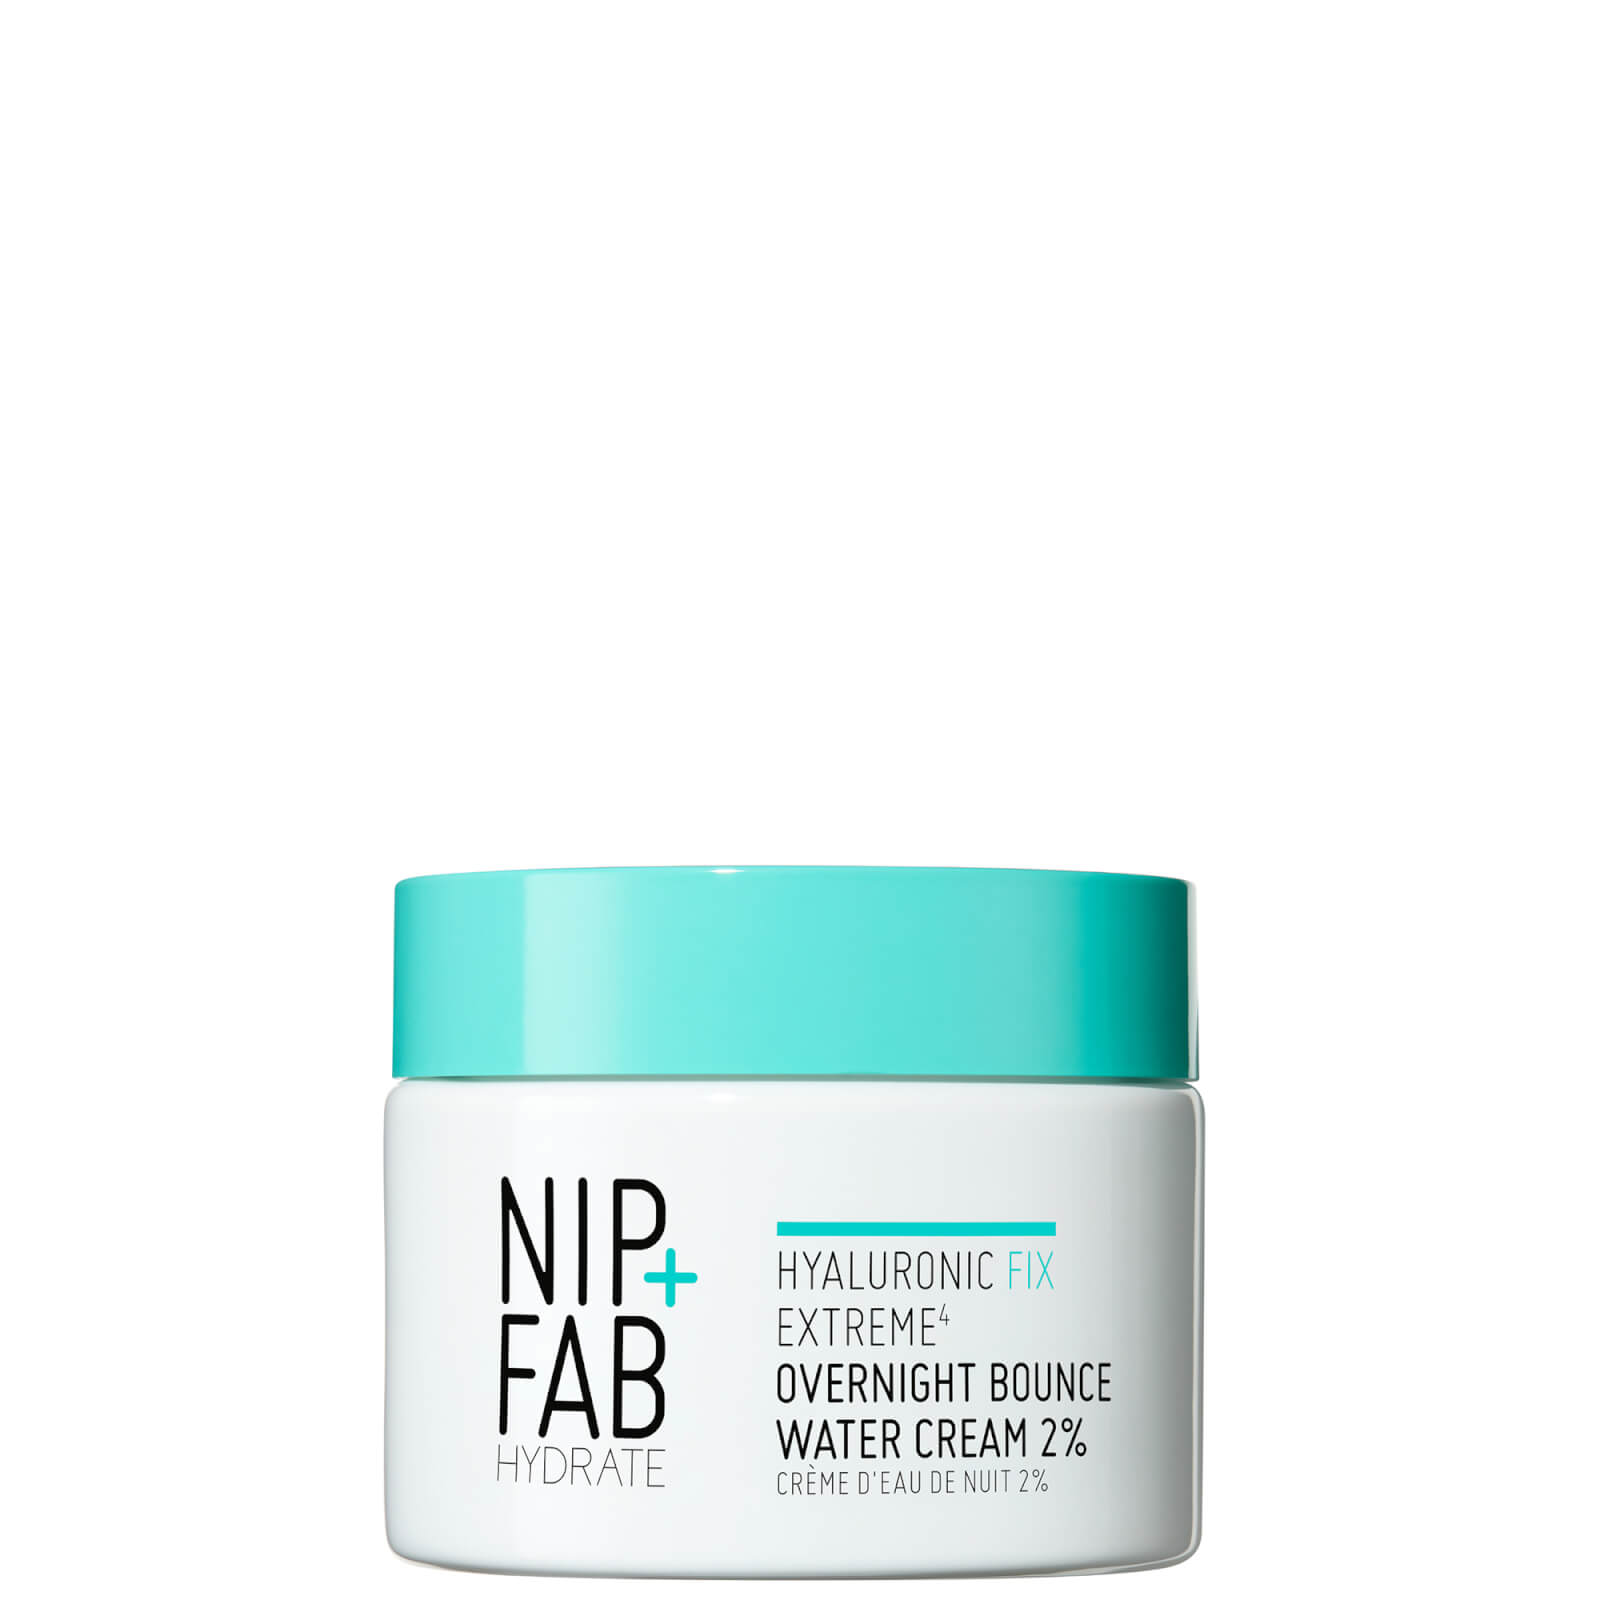 Nip+fab Hyaluronic Fix Extreme 4 Overnight Bounce Cream 50ml